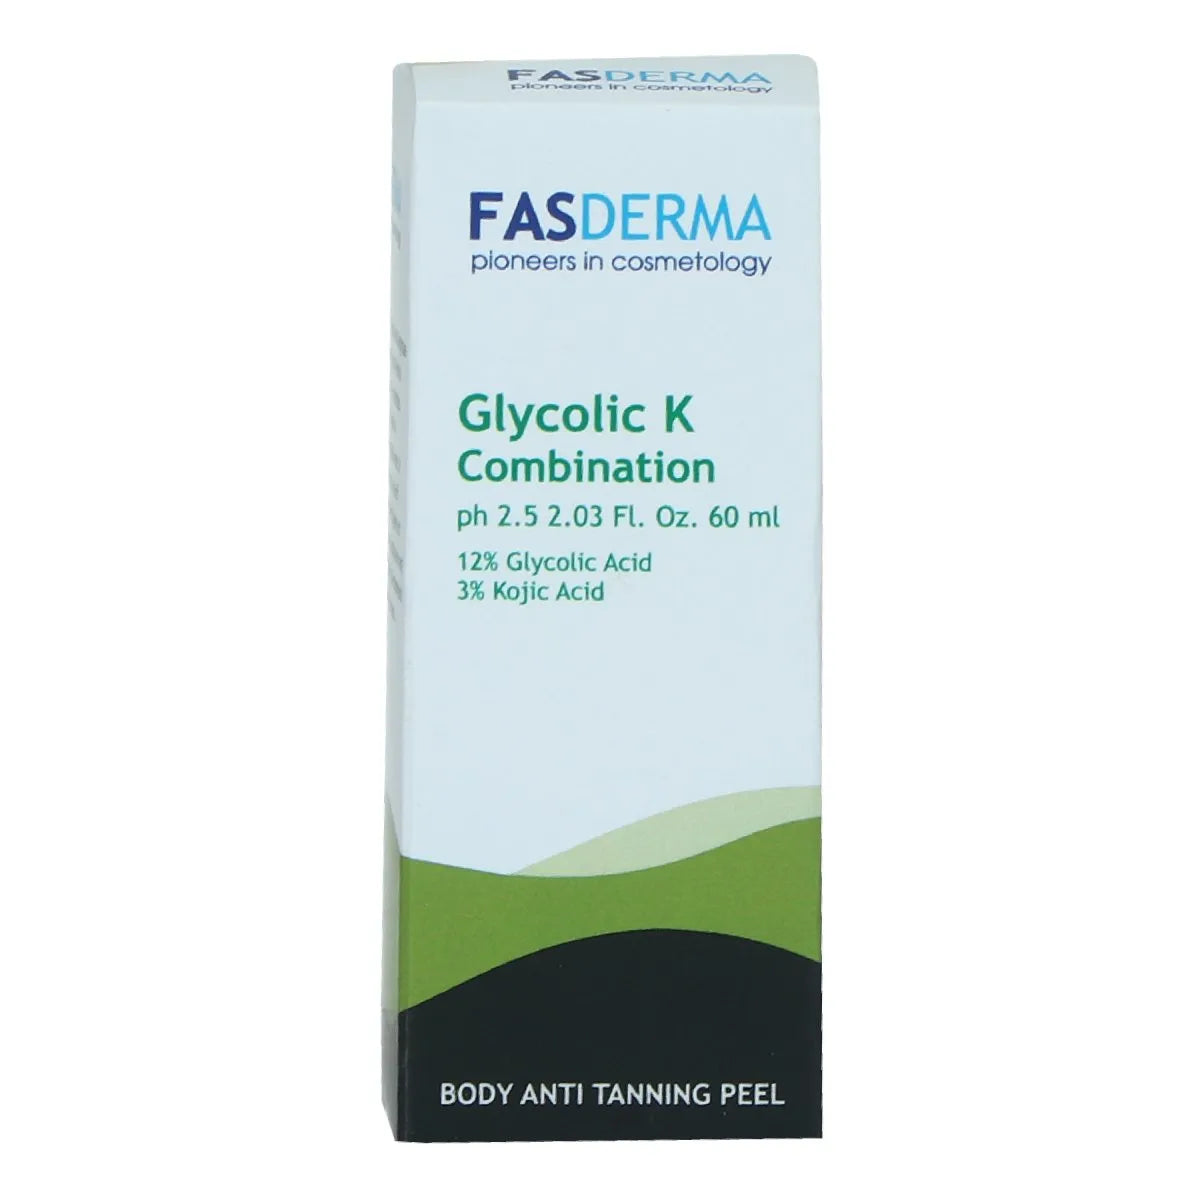 Fasderma Glycolic K Combination - Body Anti Tanning Peel, 60ml - Fasderma India